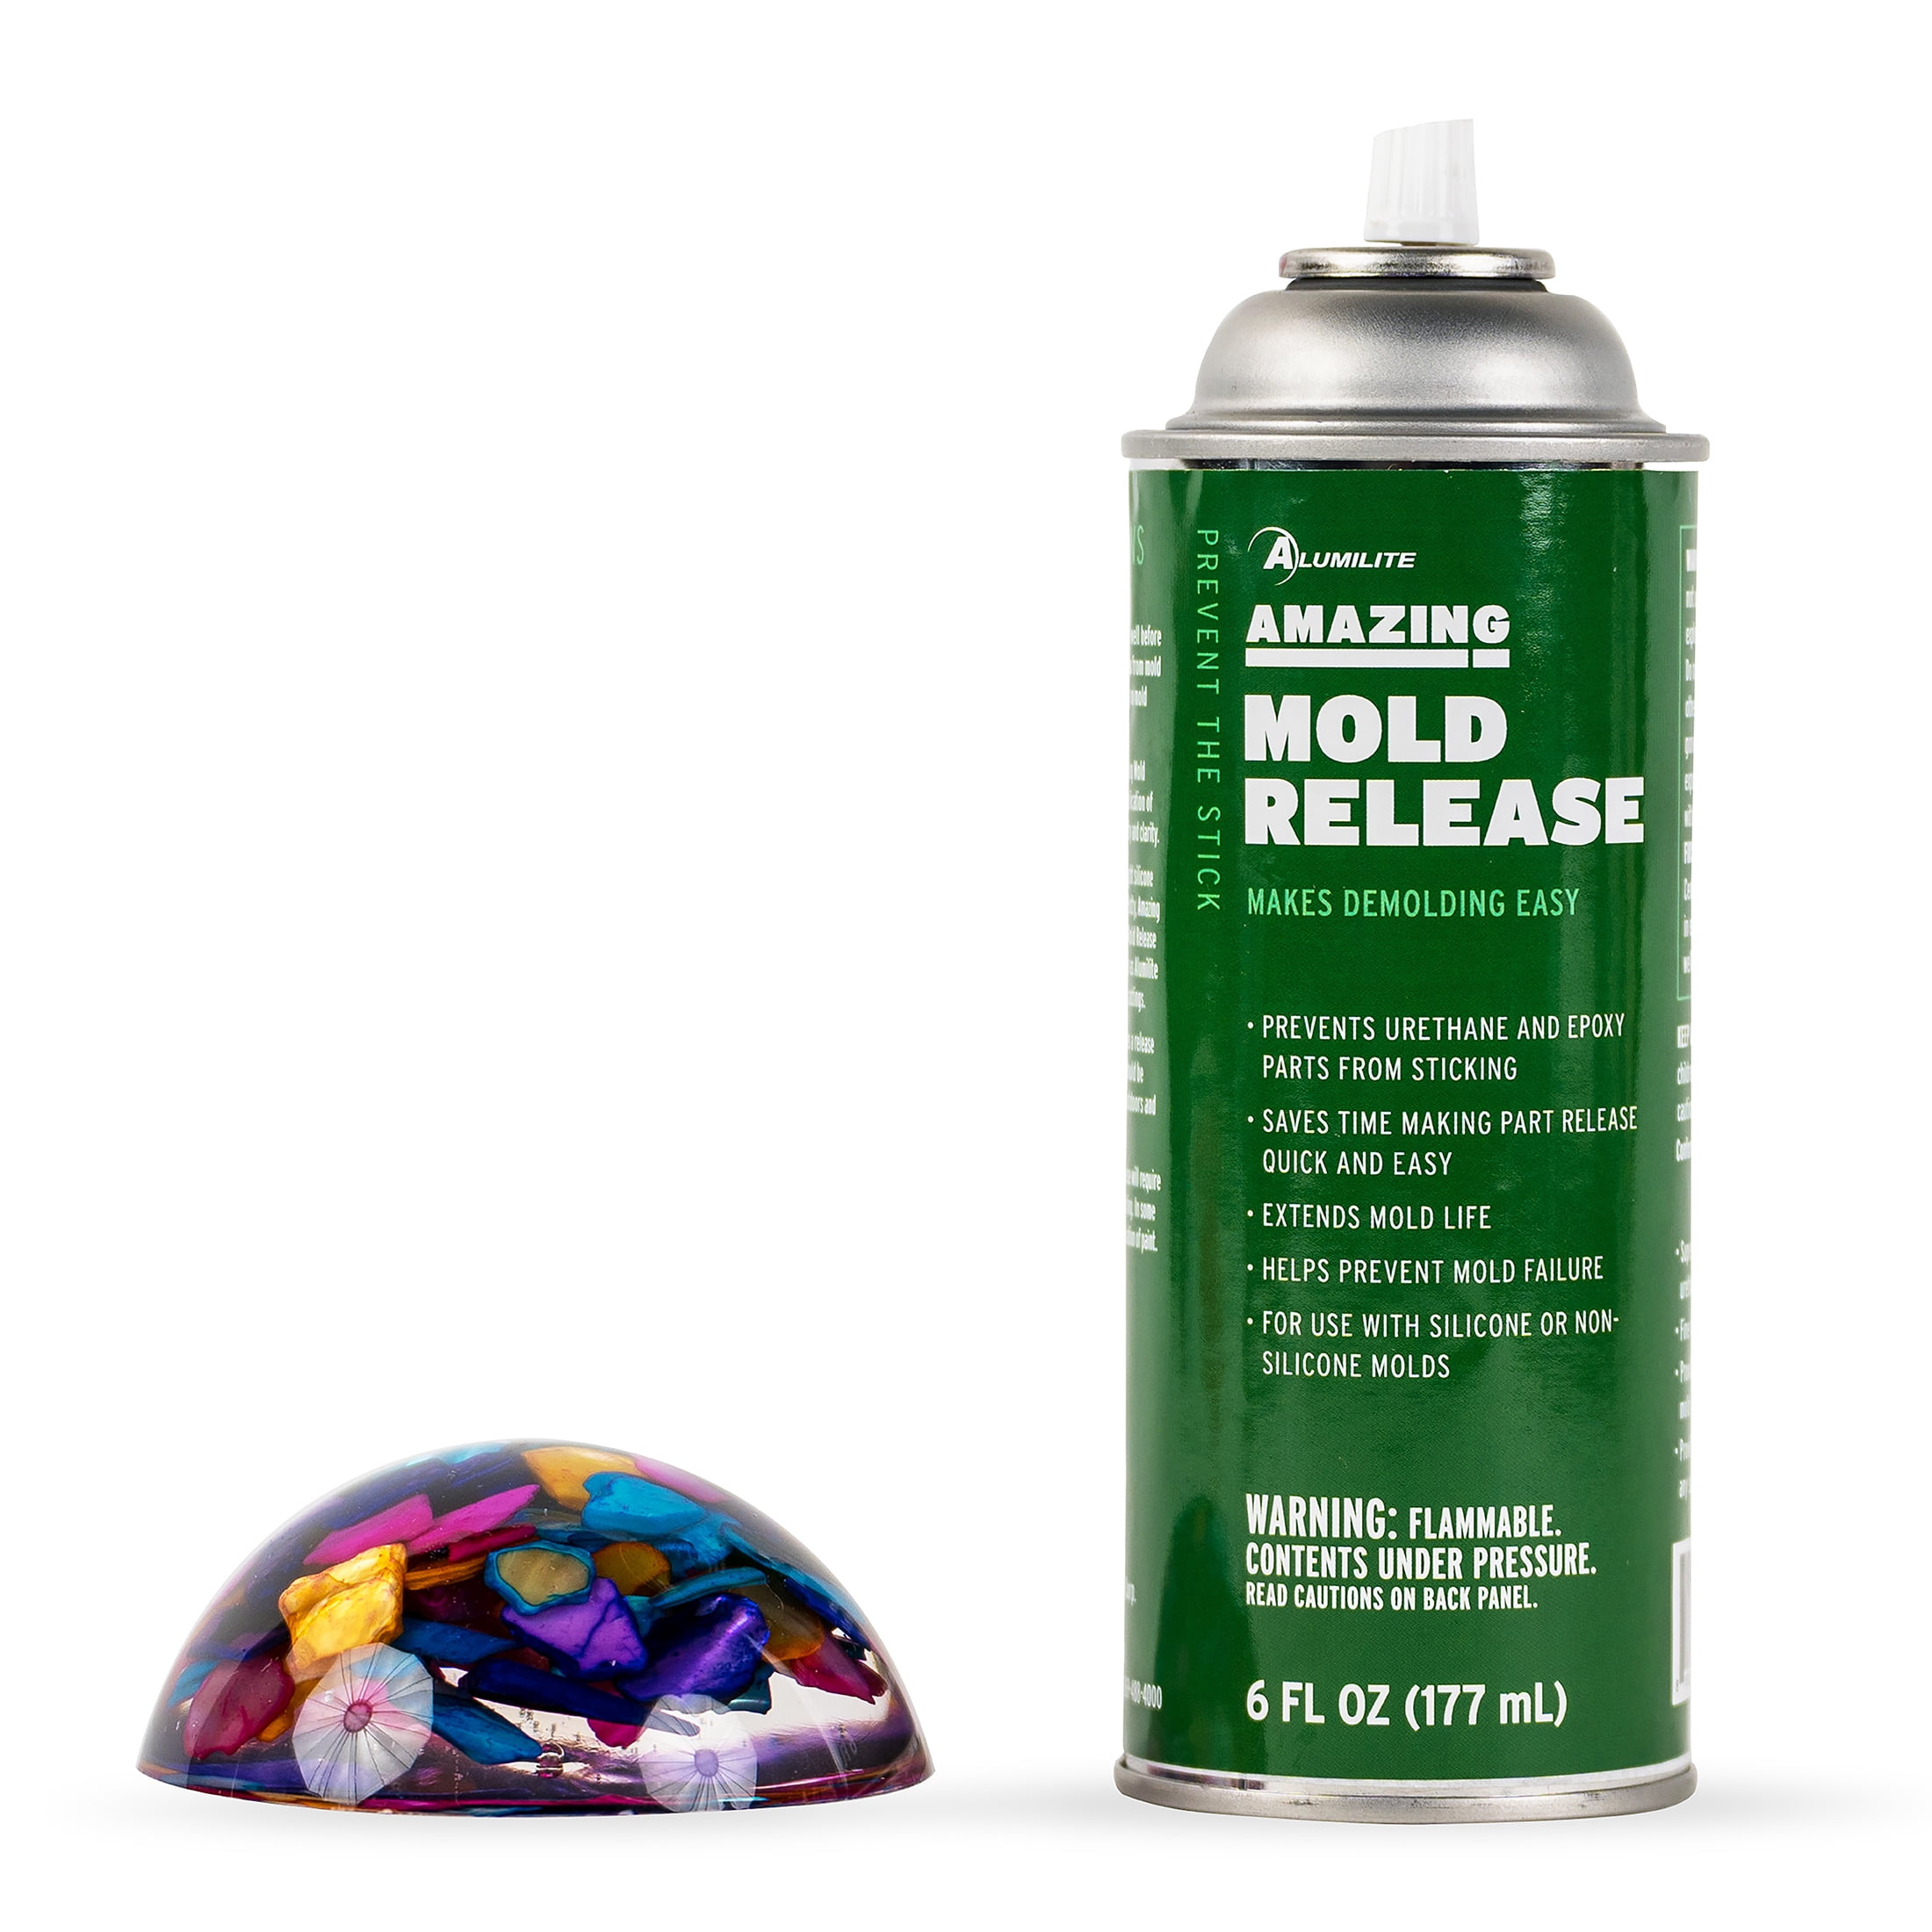 EZ Silicone Mold Release Spray - Dental Creations, Ltd.